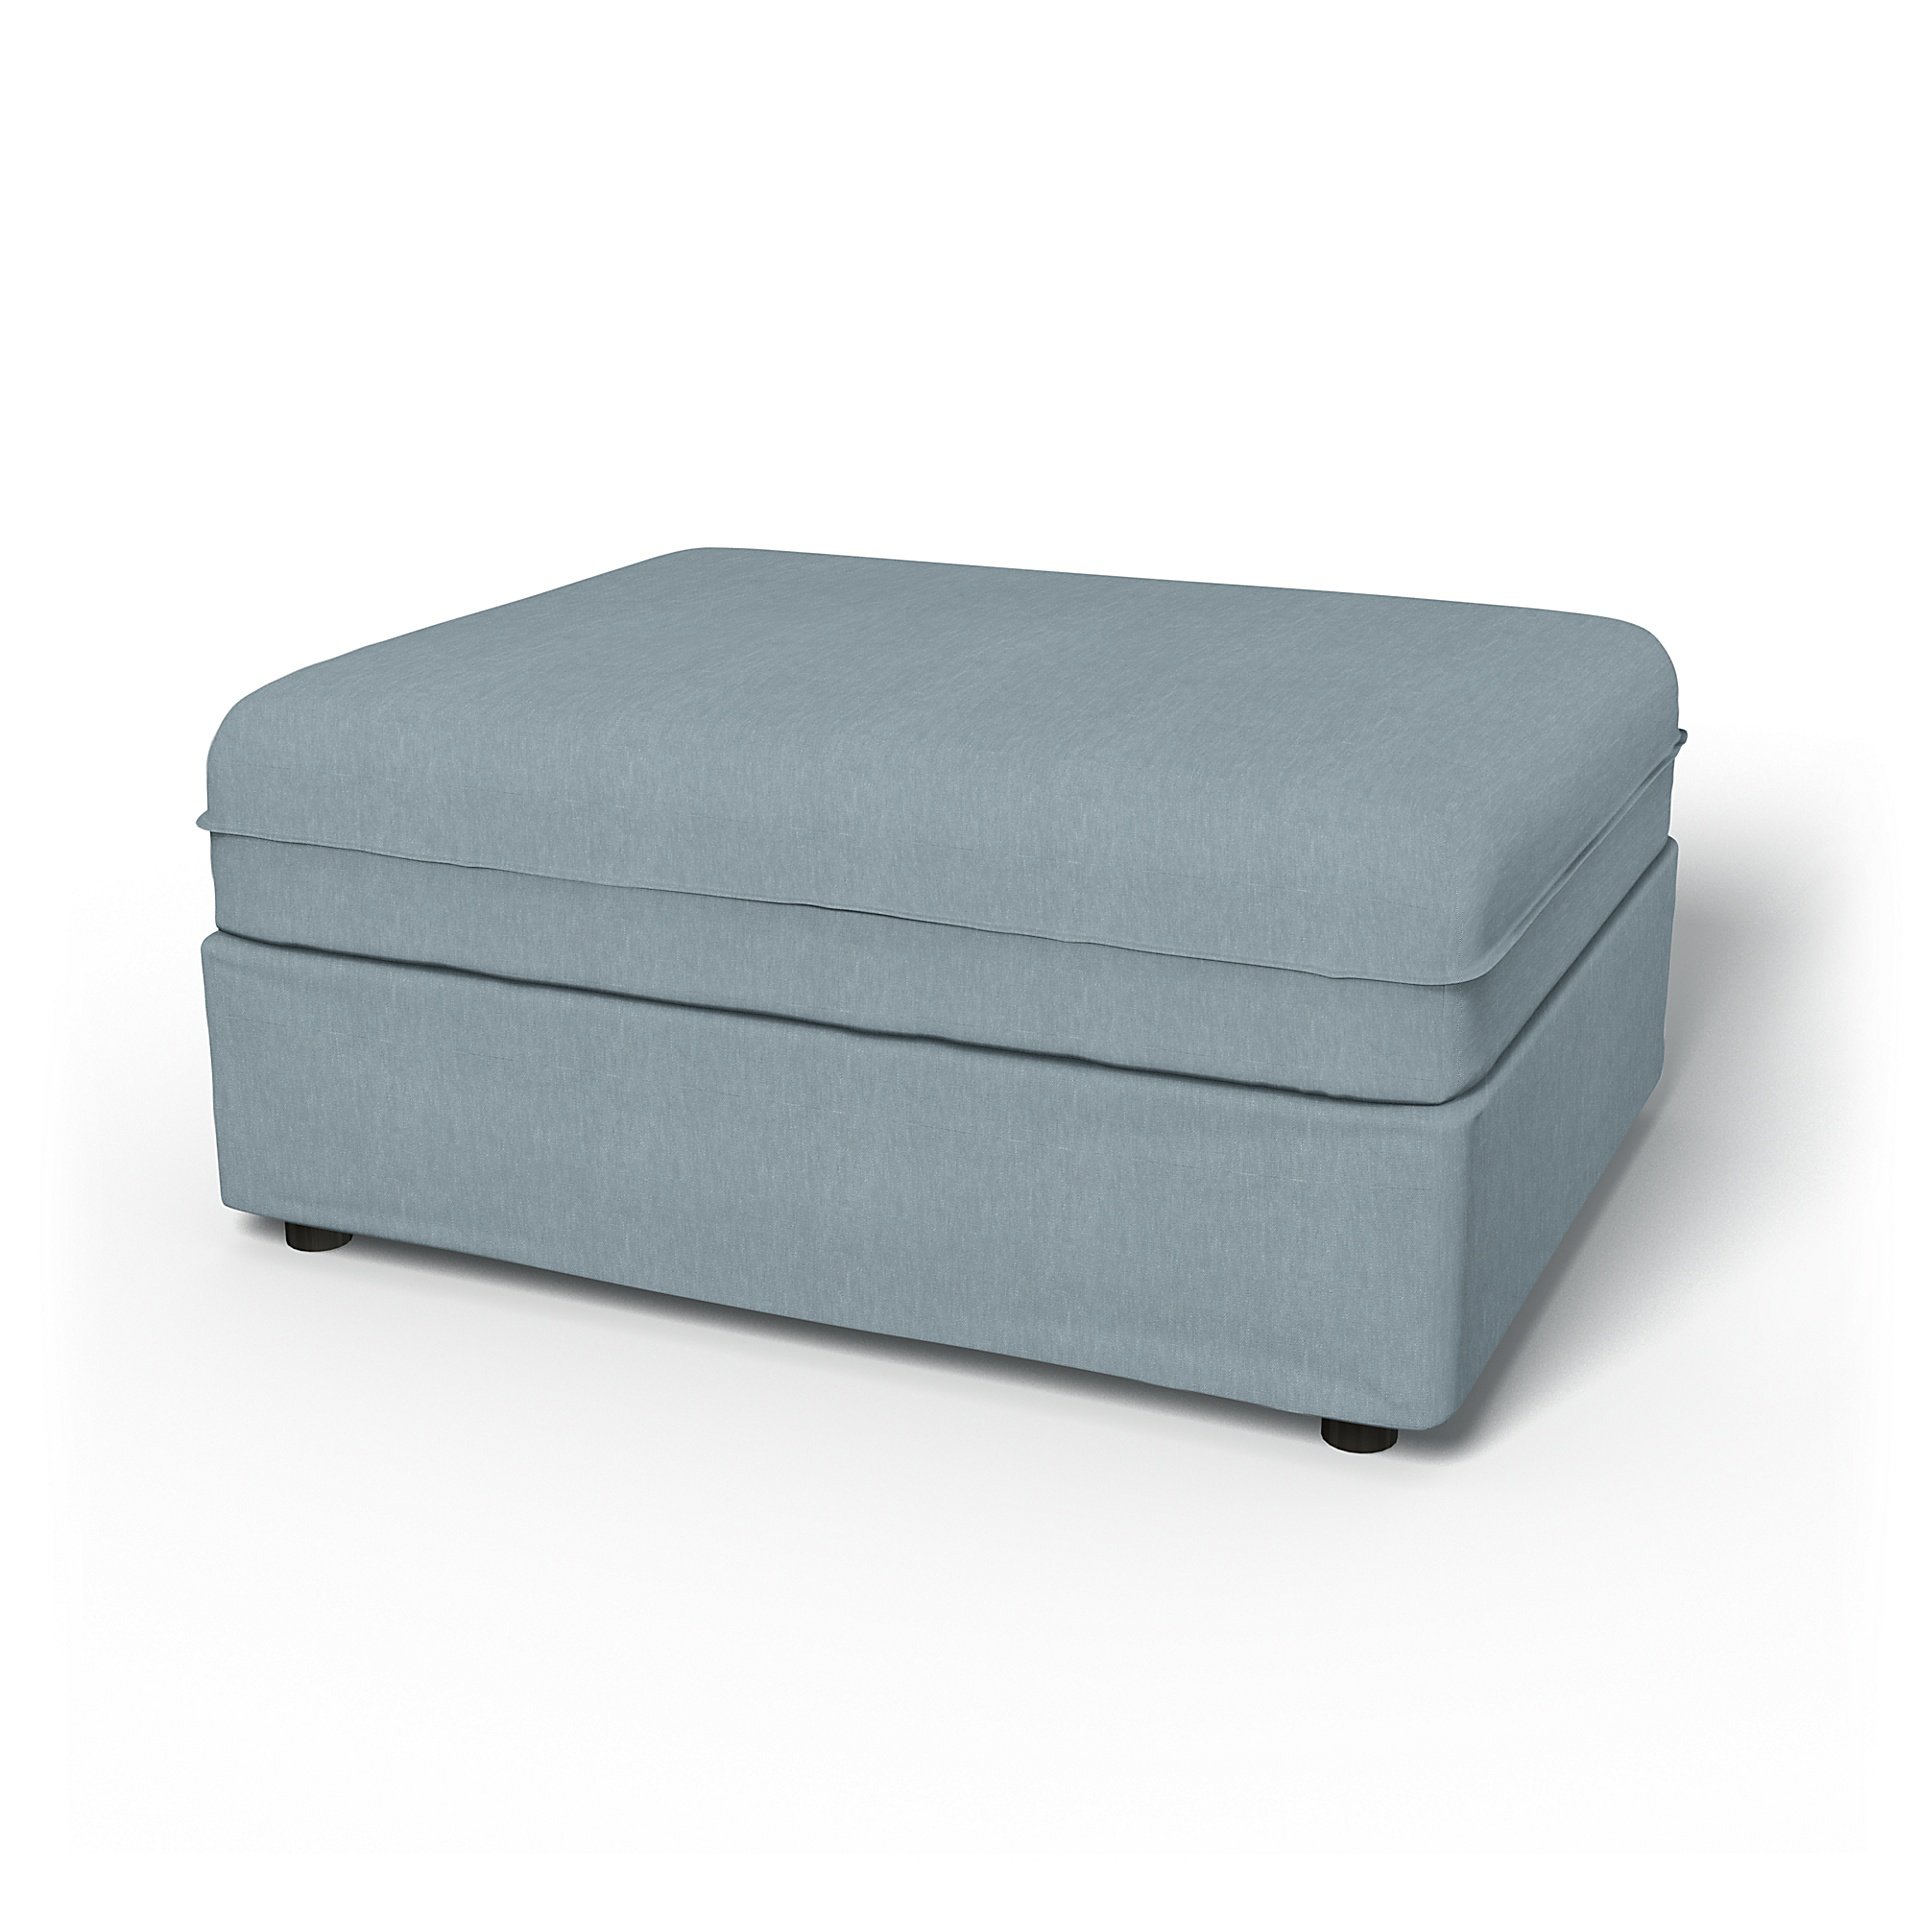 IKEA - Vallentuna Seat Module Cover 100x80cm 39x32in, Dusty Blue, Linen - Bemz